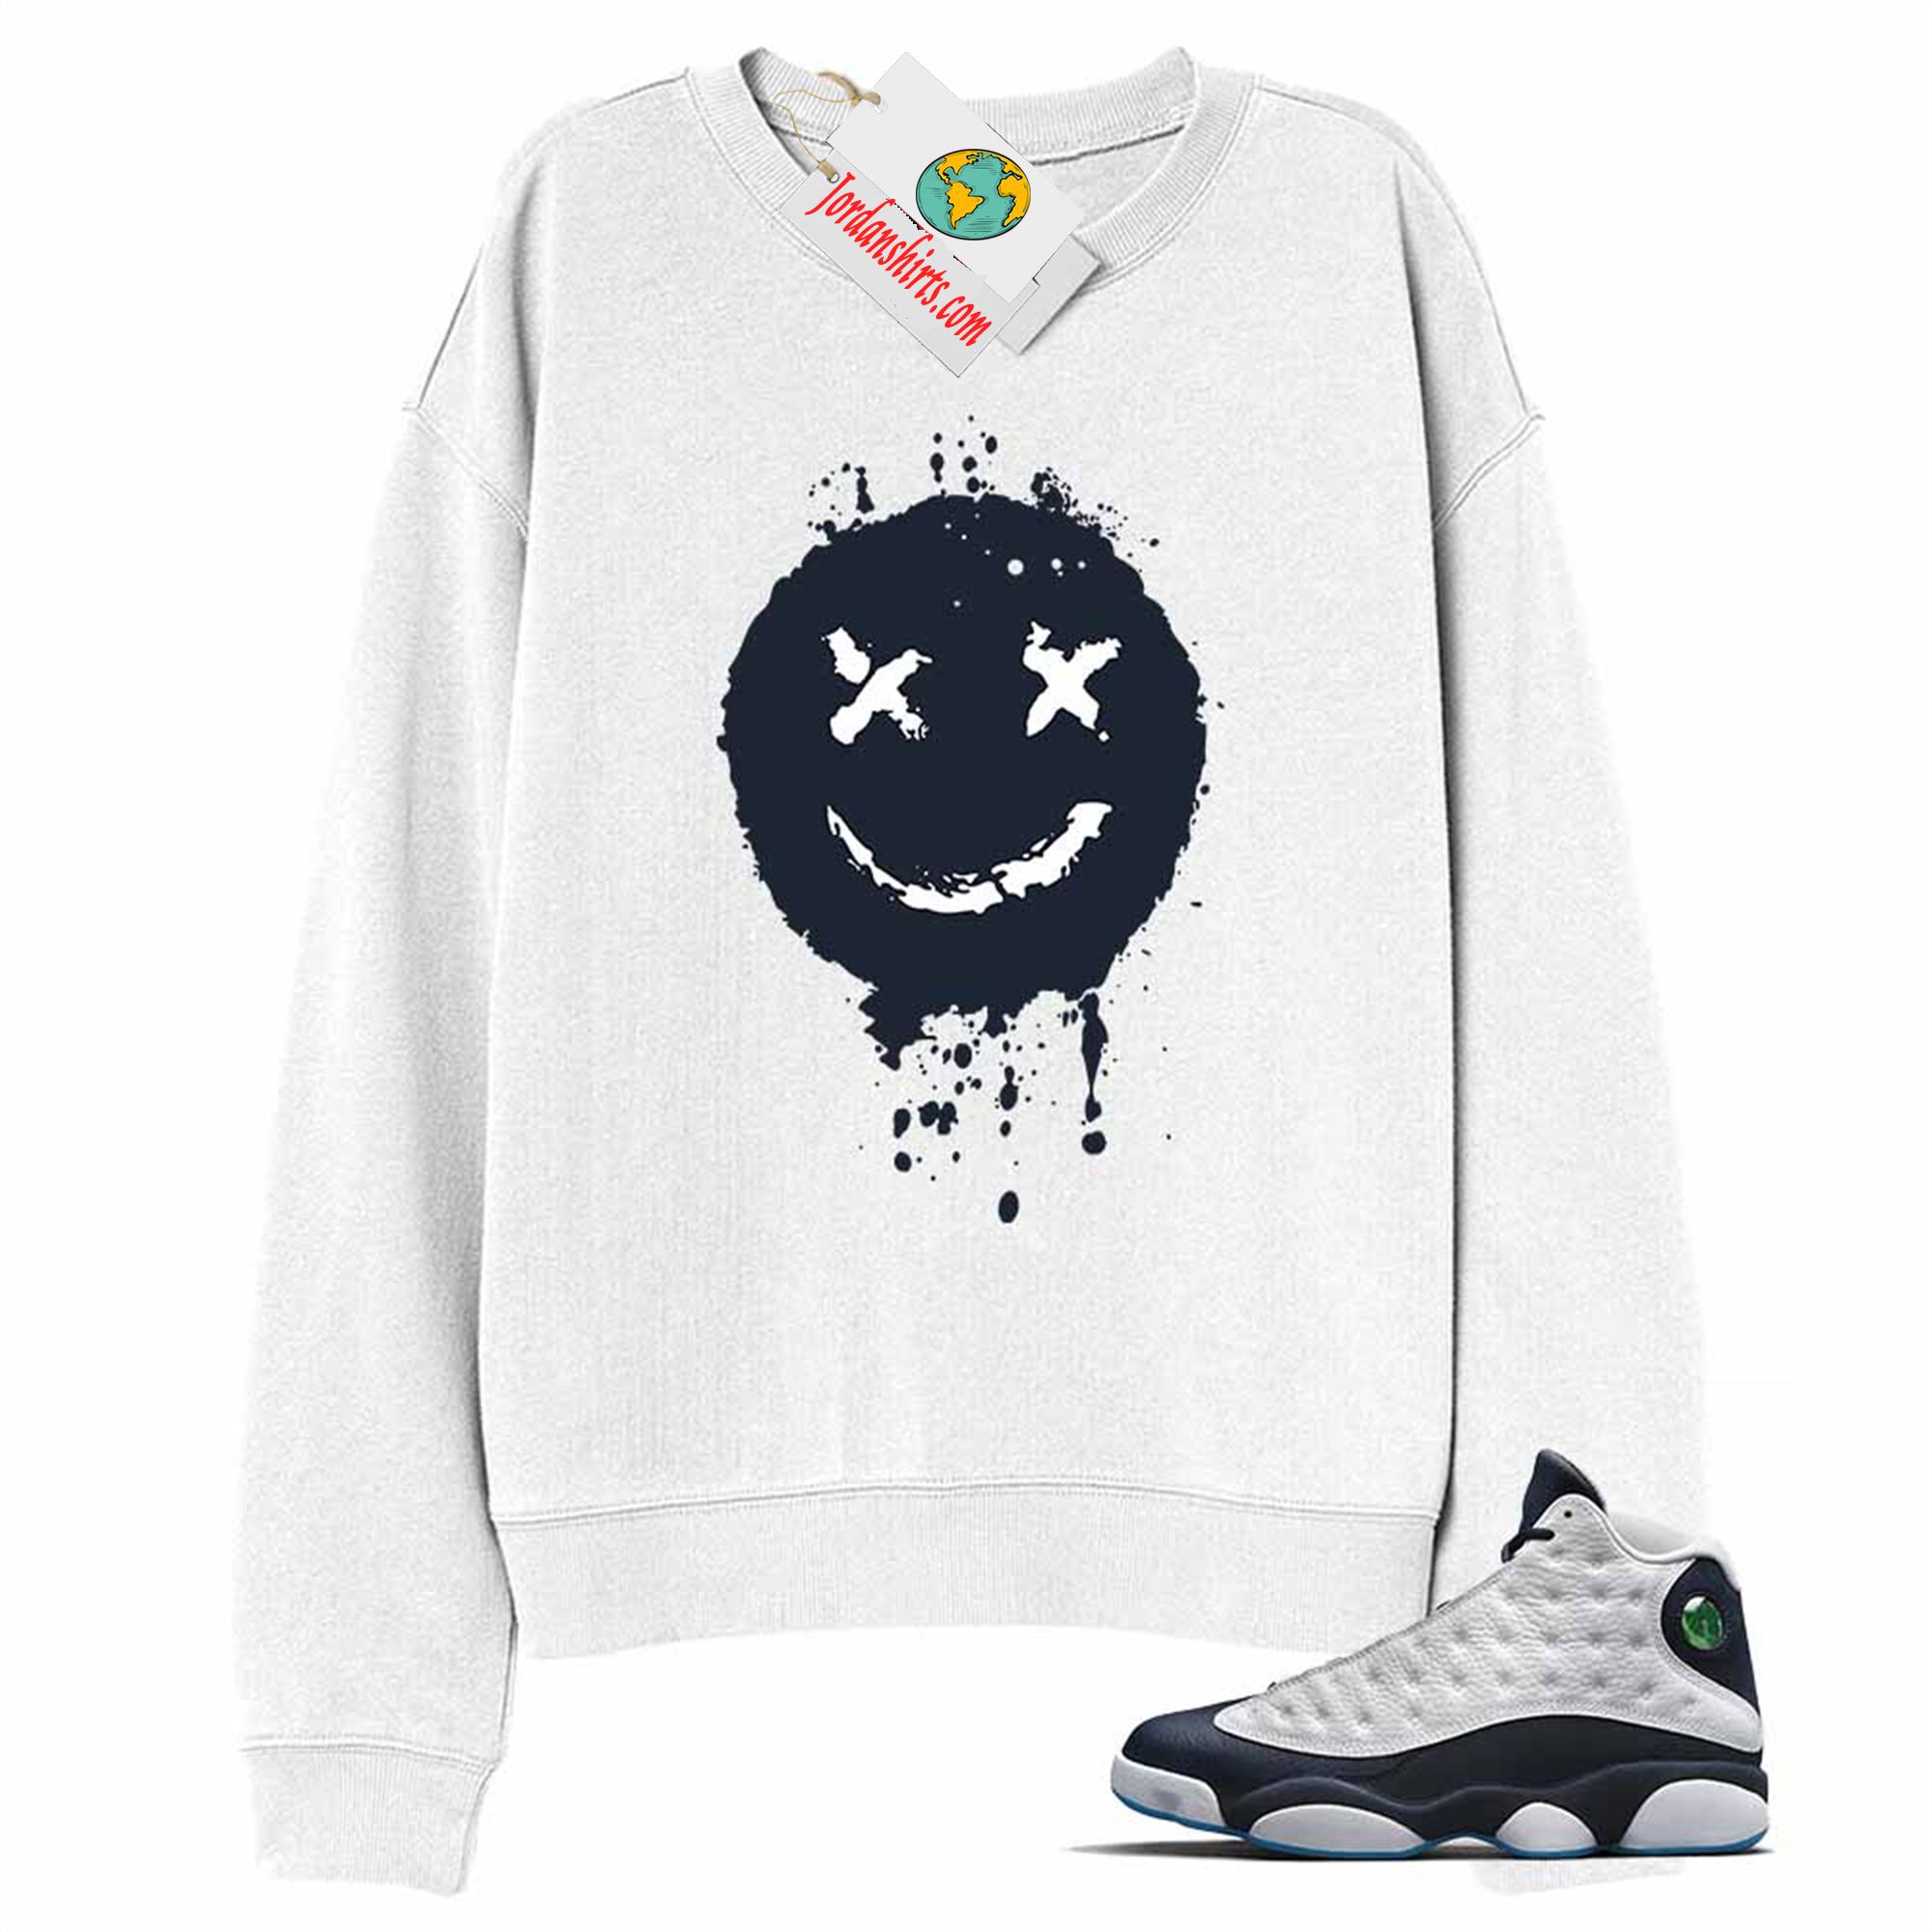 Jordan 13 Sweatshirt, Smile Happy Face White Sweatshirt Air Jordan 13 Obsidian 13s Full Size Up To 5xl